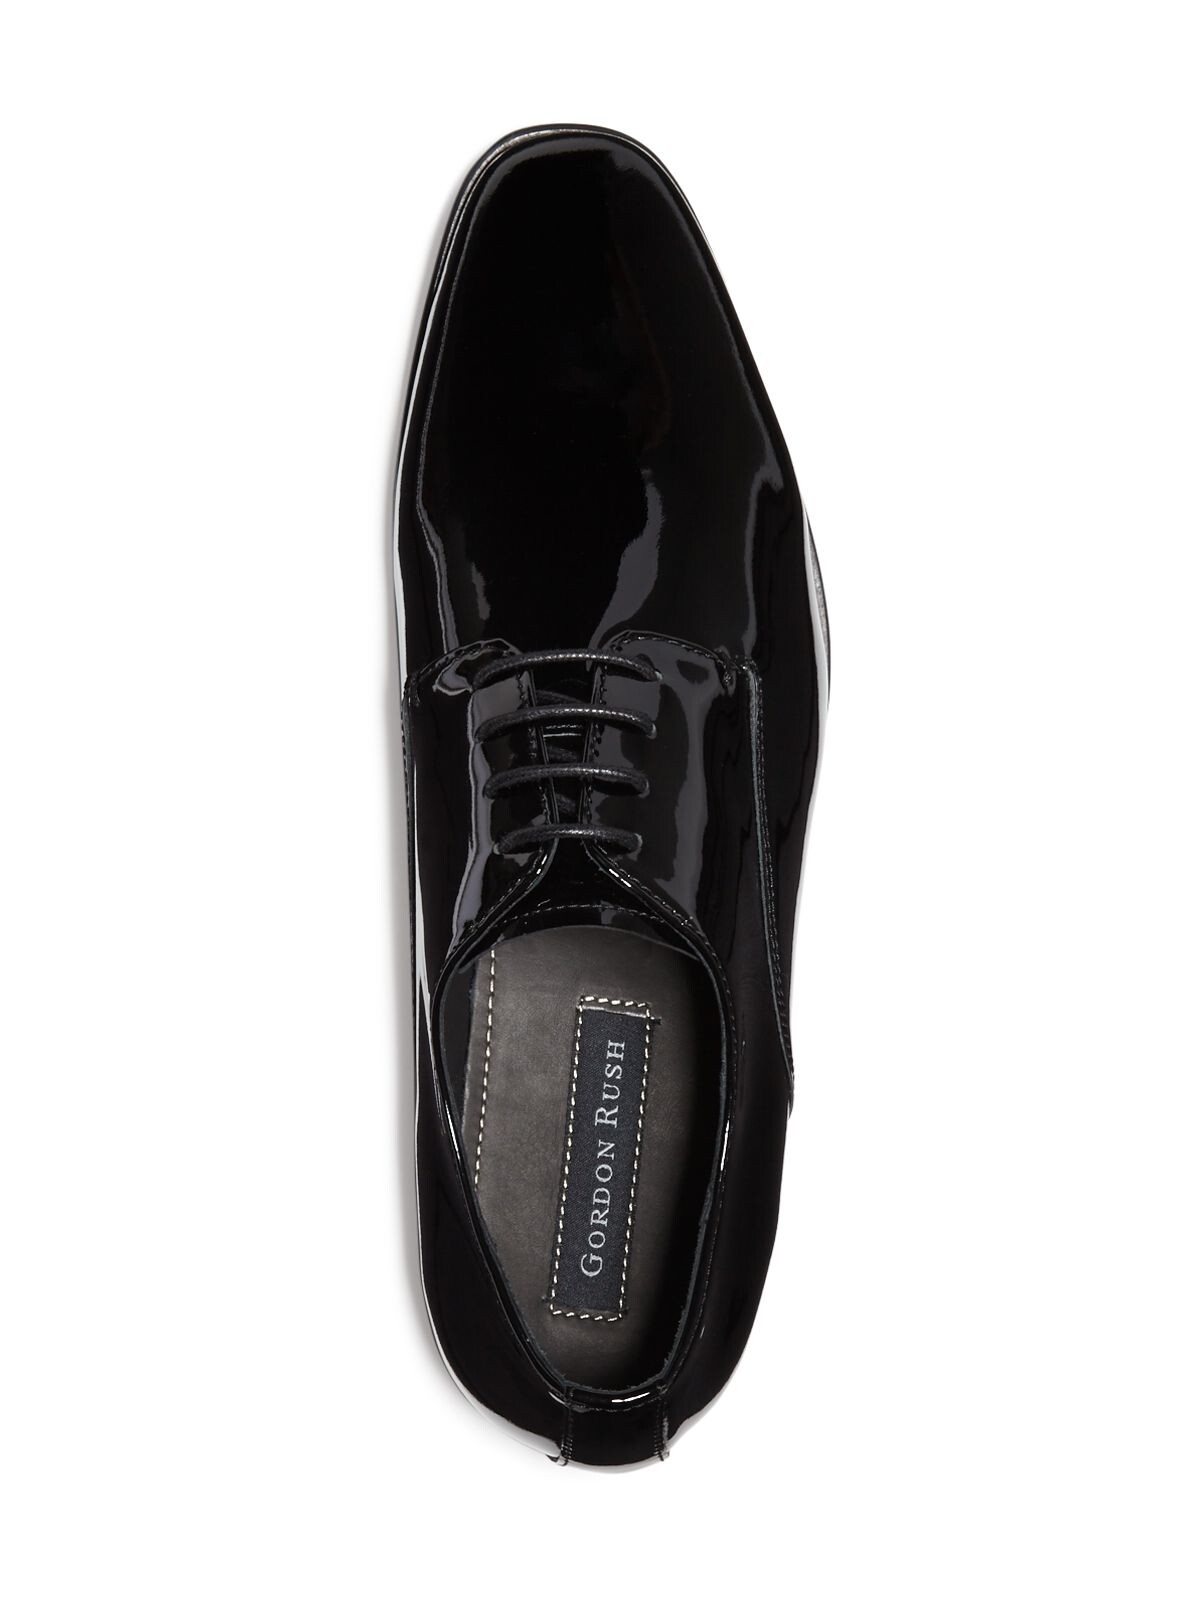 GORDON RUSH Mens Black Manning Round Toe Block Heel Lace-Up Leather Dress Oxford Shoes 11.5